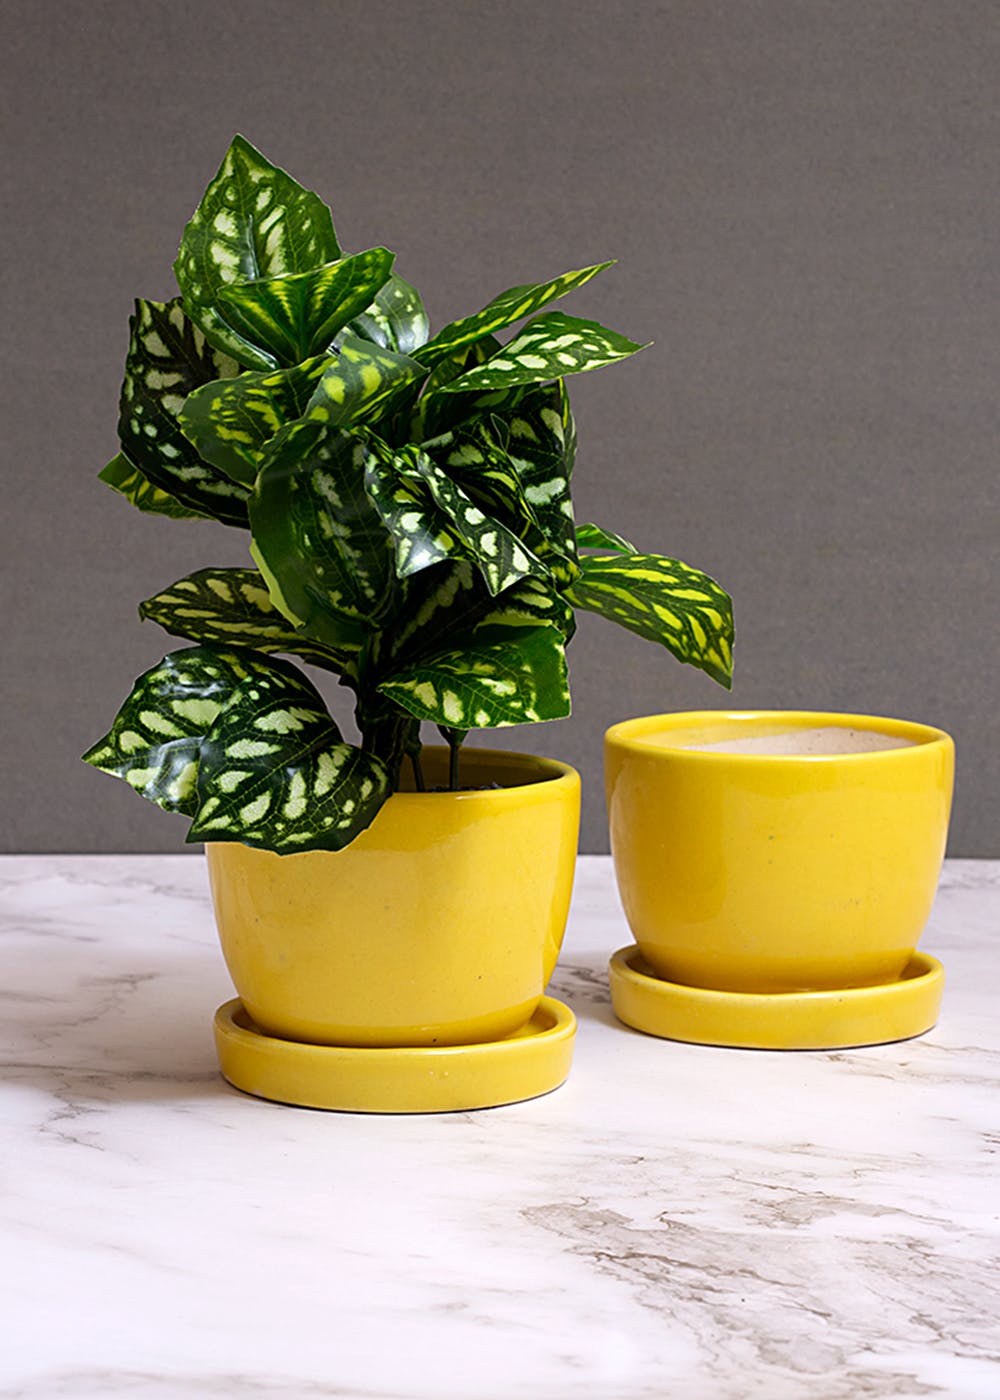 Ceramic Pots & Planters